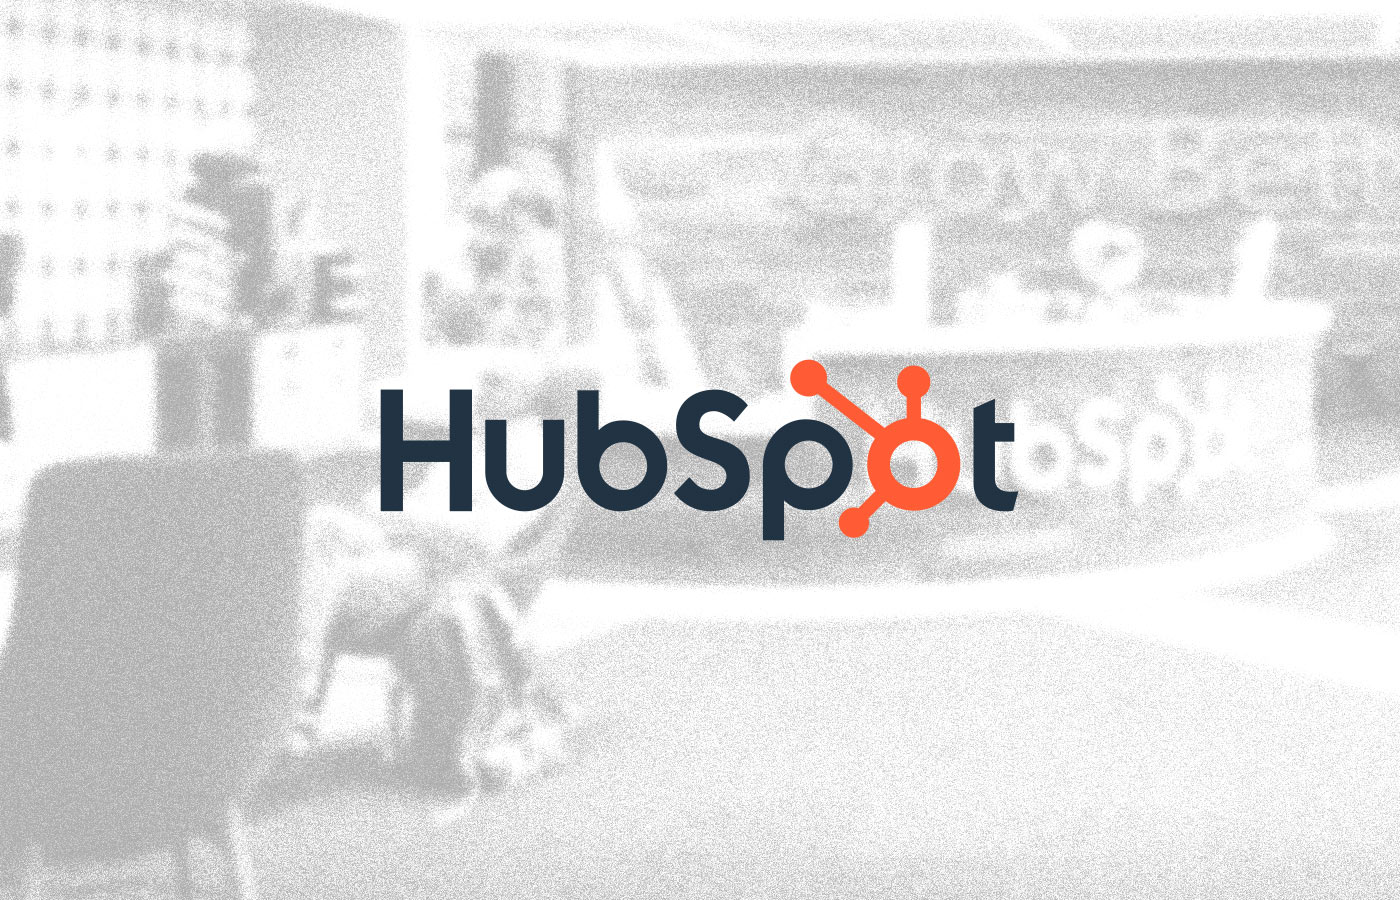 HubSpot logo overlayed on an image of HubSpot's office lobby